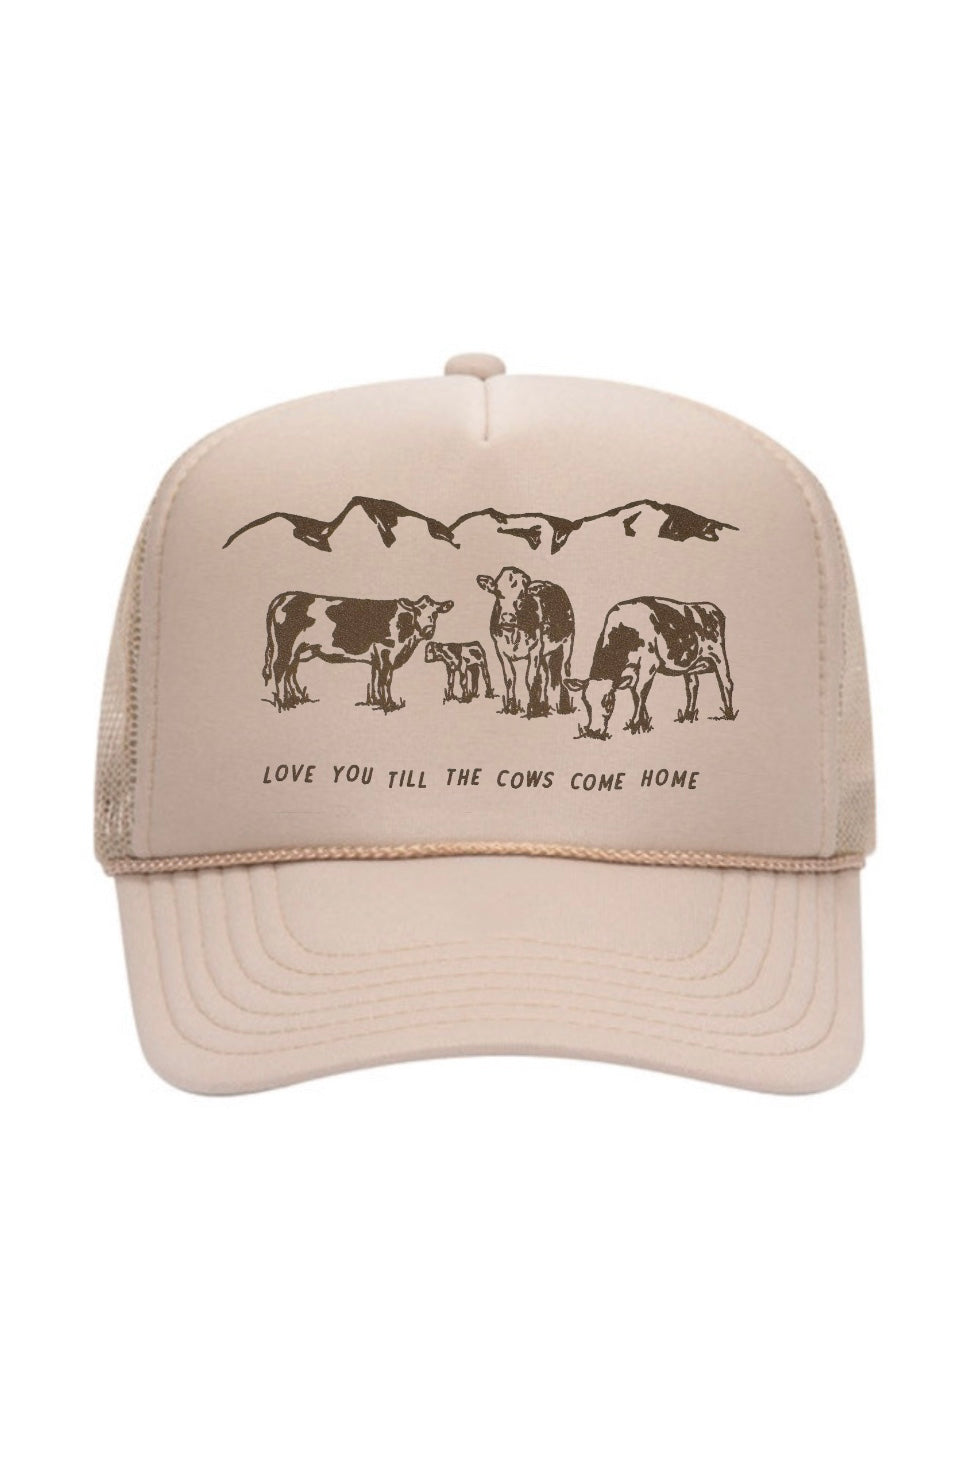 Cows Come Home Trucker Hat (Khaki)